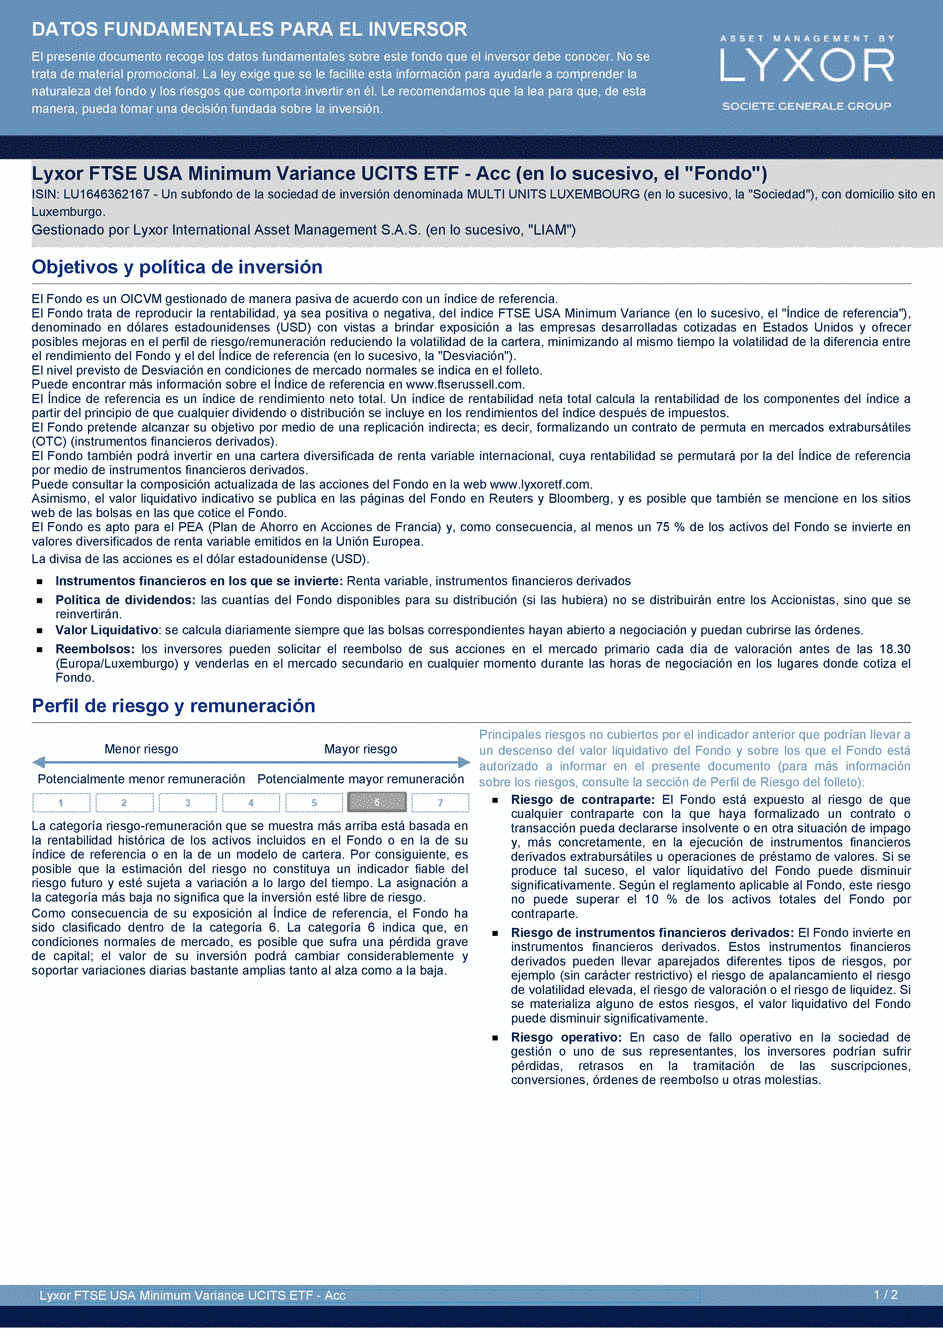 DICI Lyxor FTSE USA Minimum Variance UCITS ETF - Acc - 26/08/2020 - Espagnol